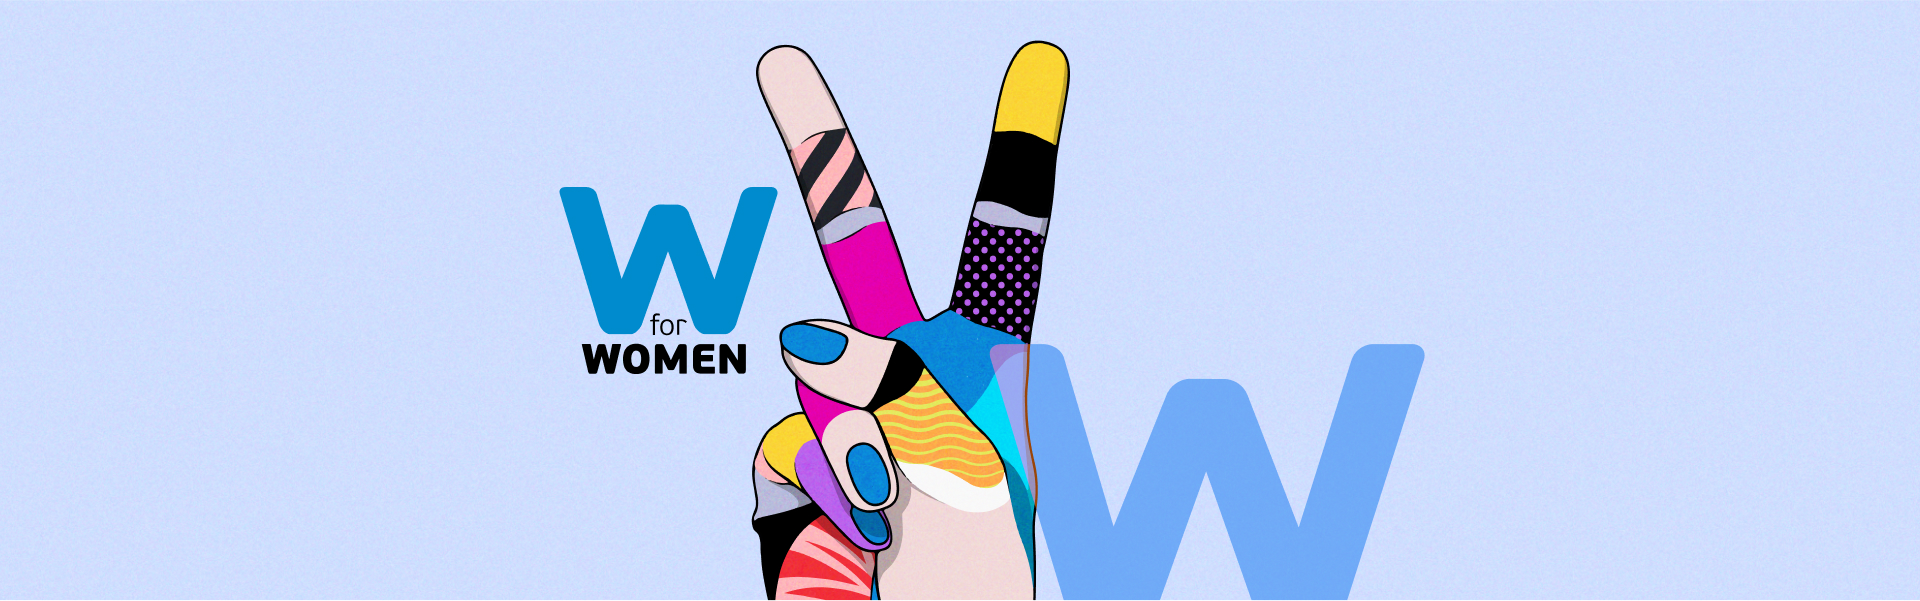 W4 women-banner